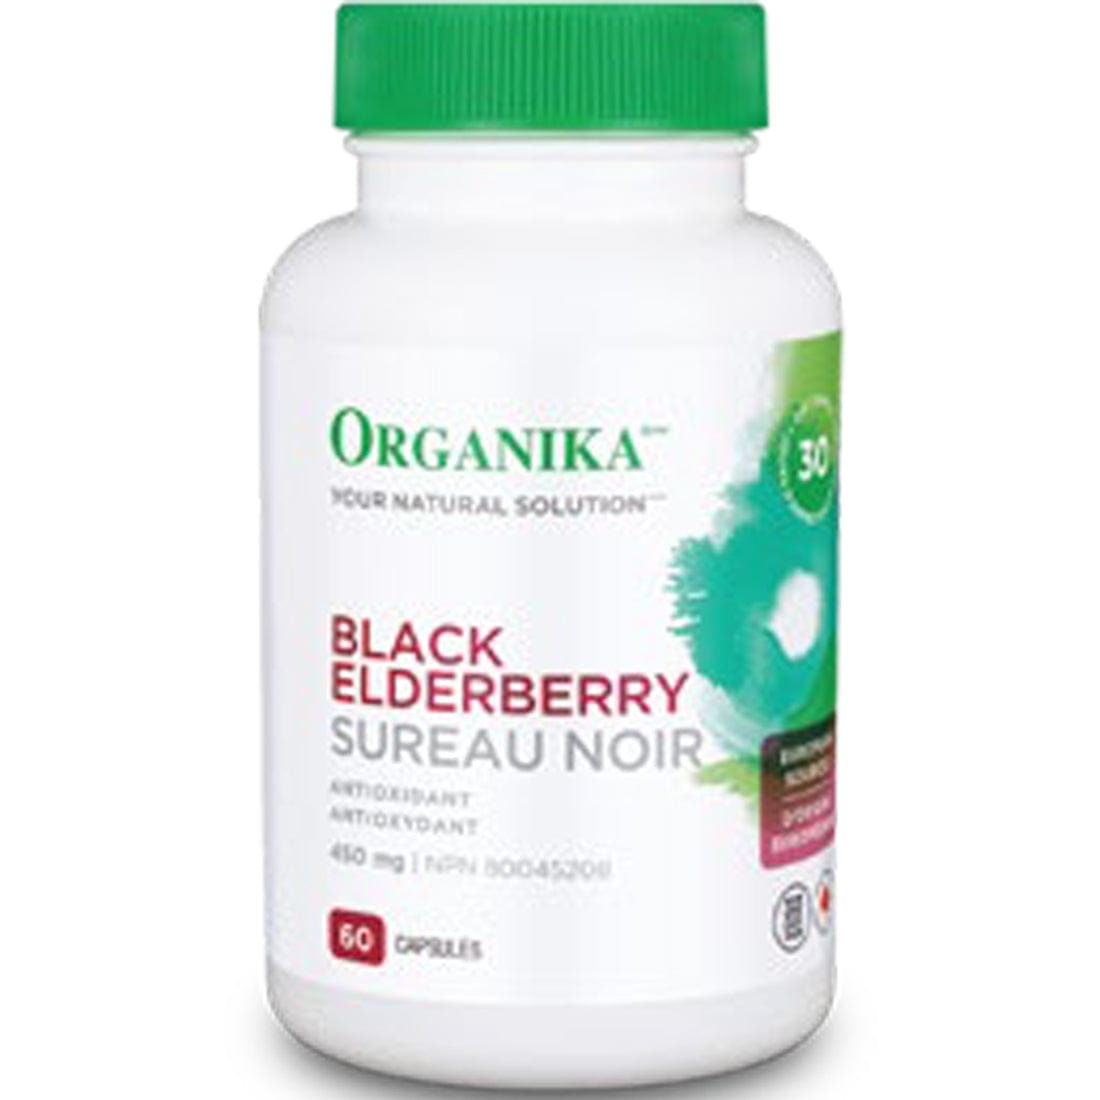 Organika Black Elderberry (4:1 extract equivalent to 1800mg of dried Elderberry), 60 Capsules (NEW!)